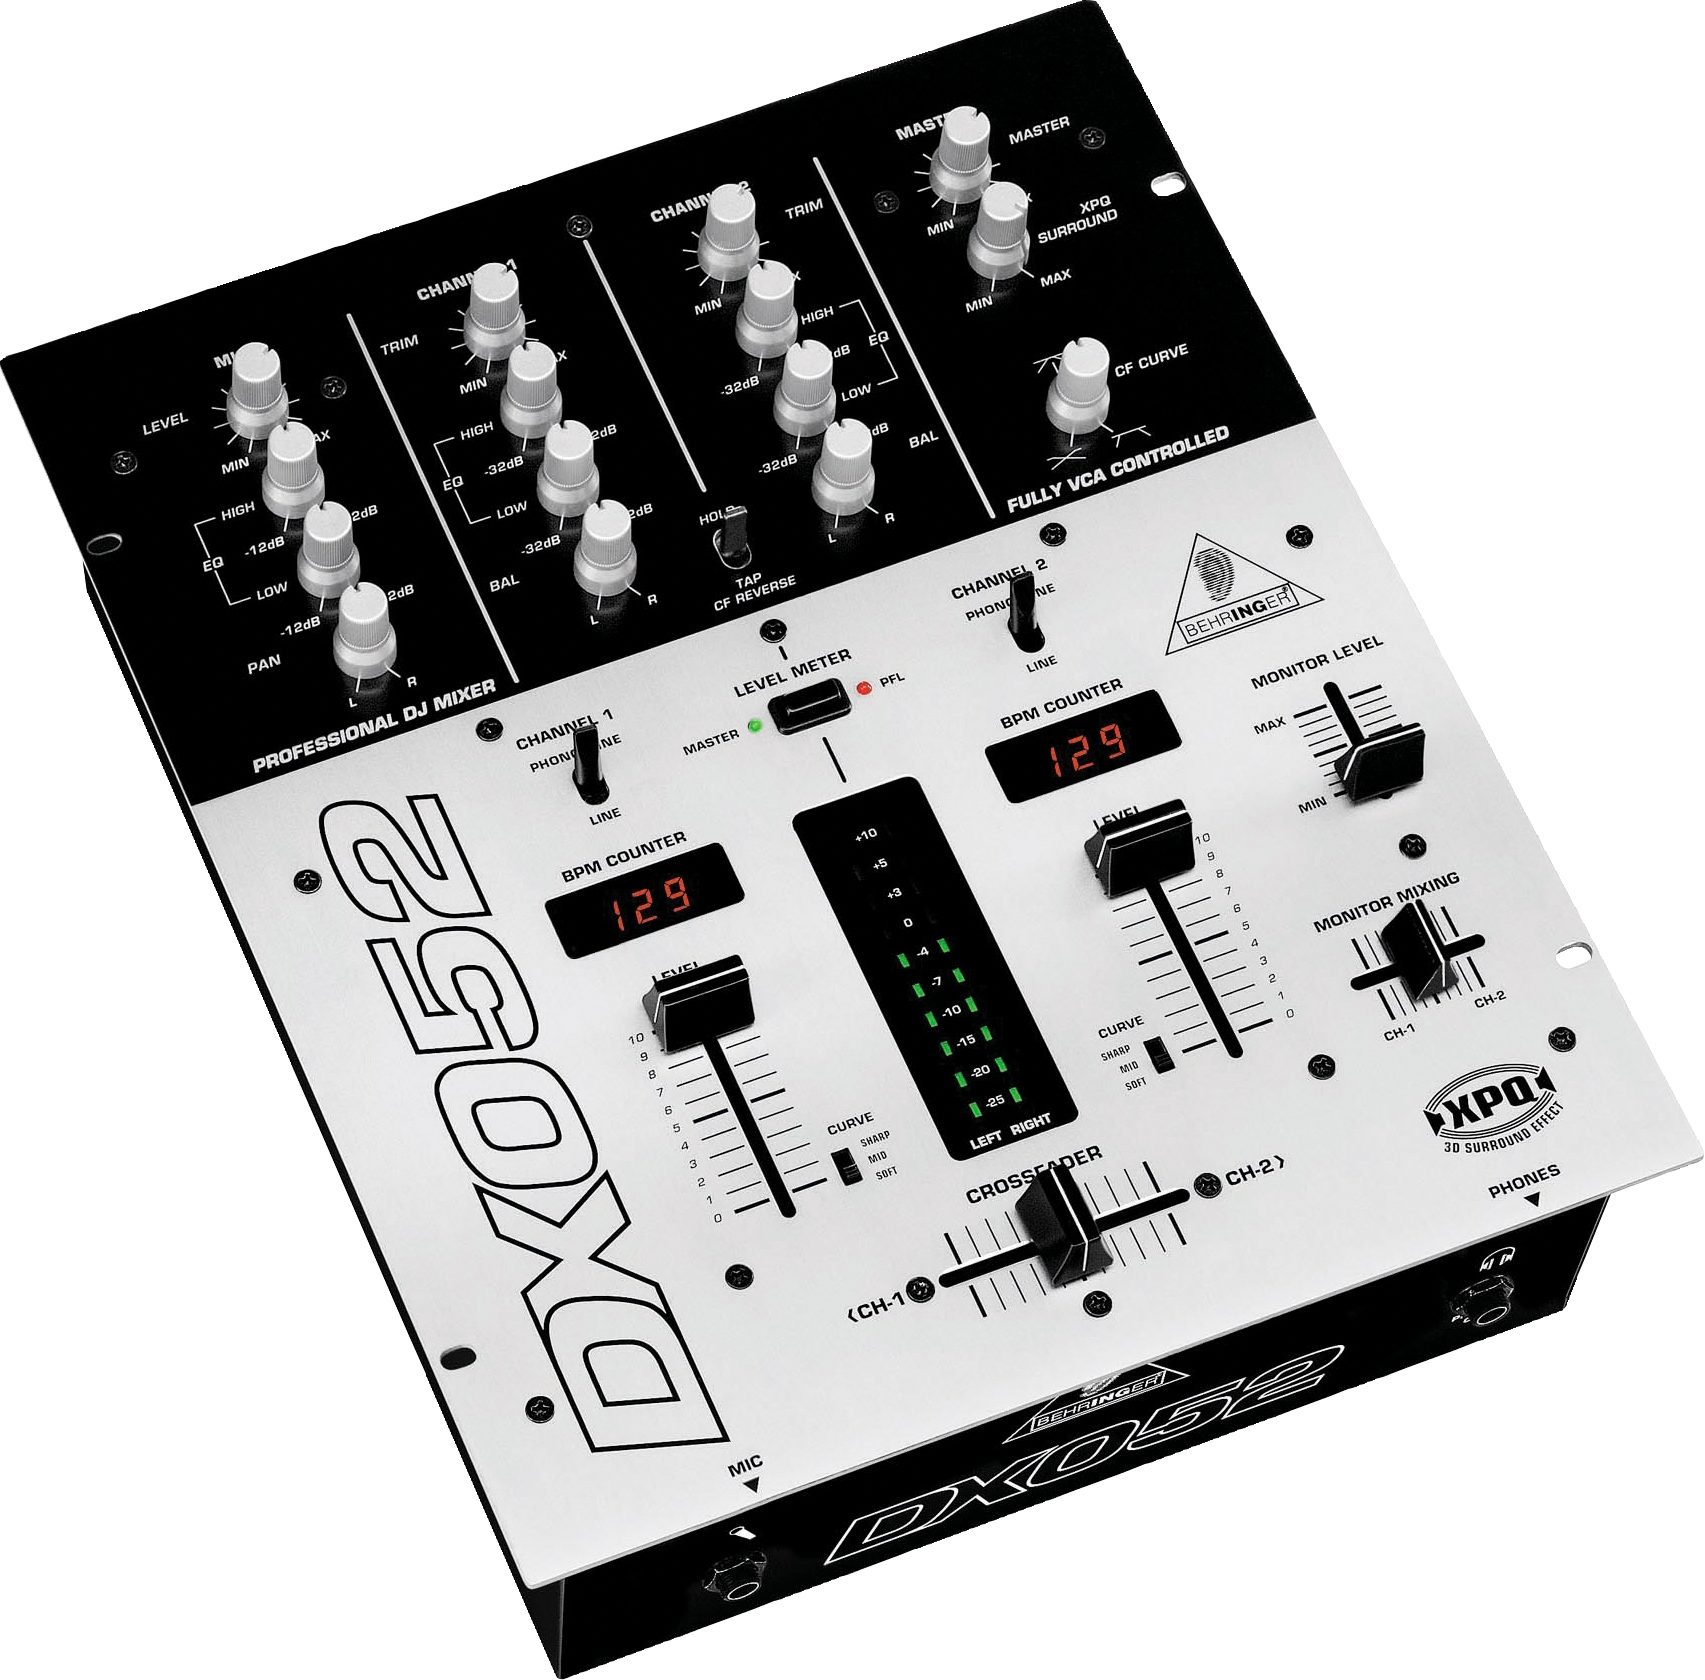 Behringer DX052 DJ Mixer | zZounds